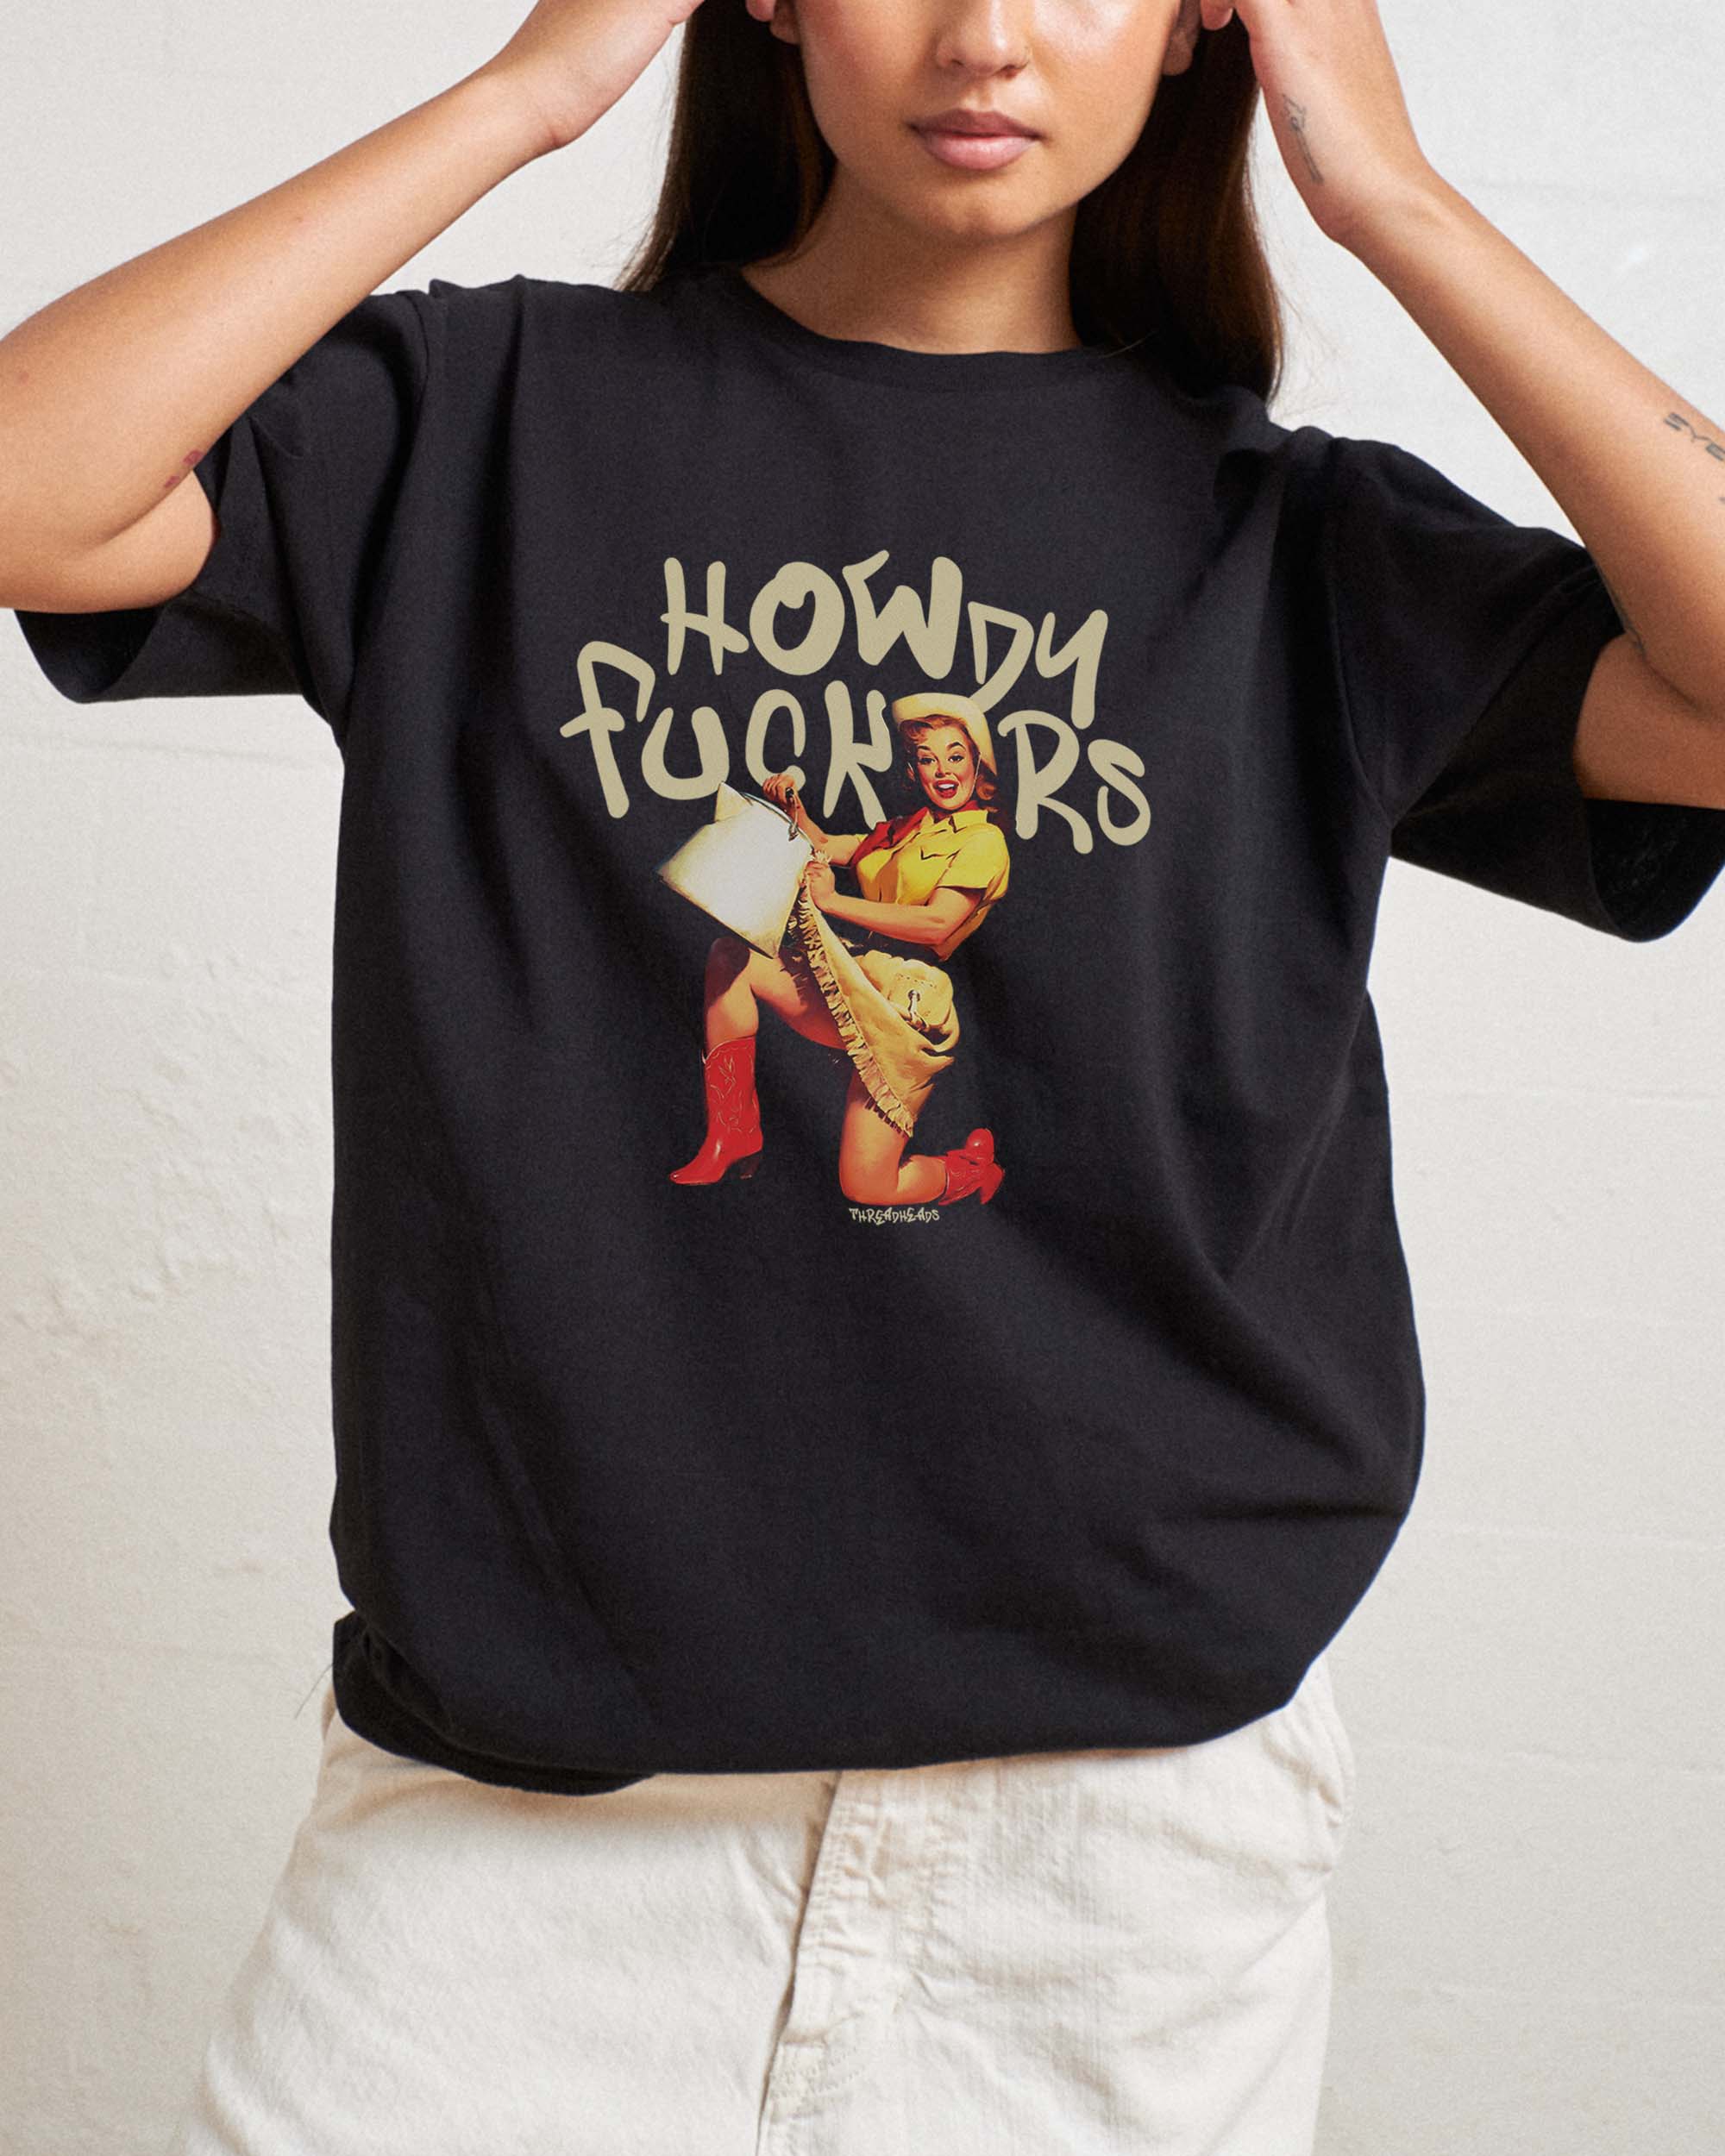 Howdy F*ckers T-Shirt